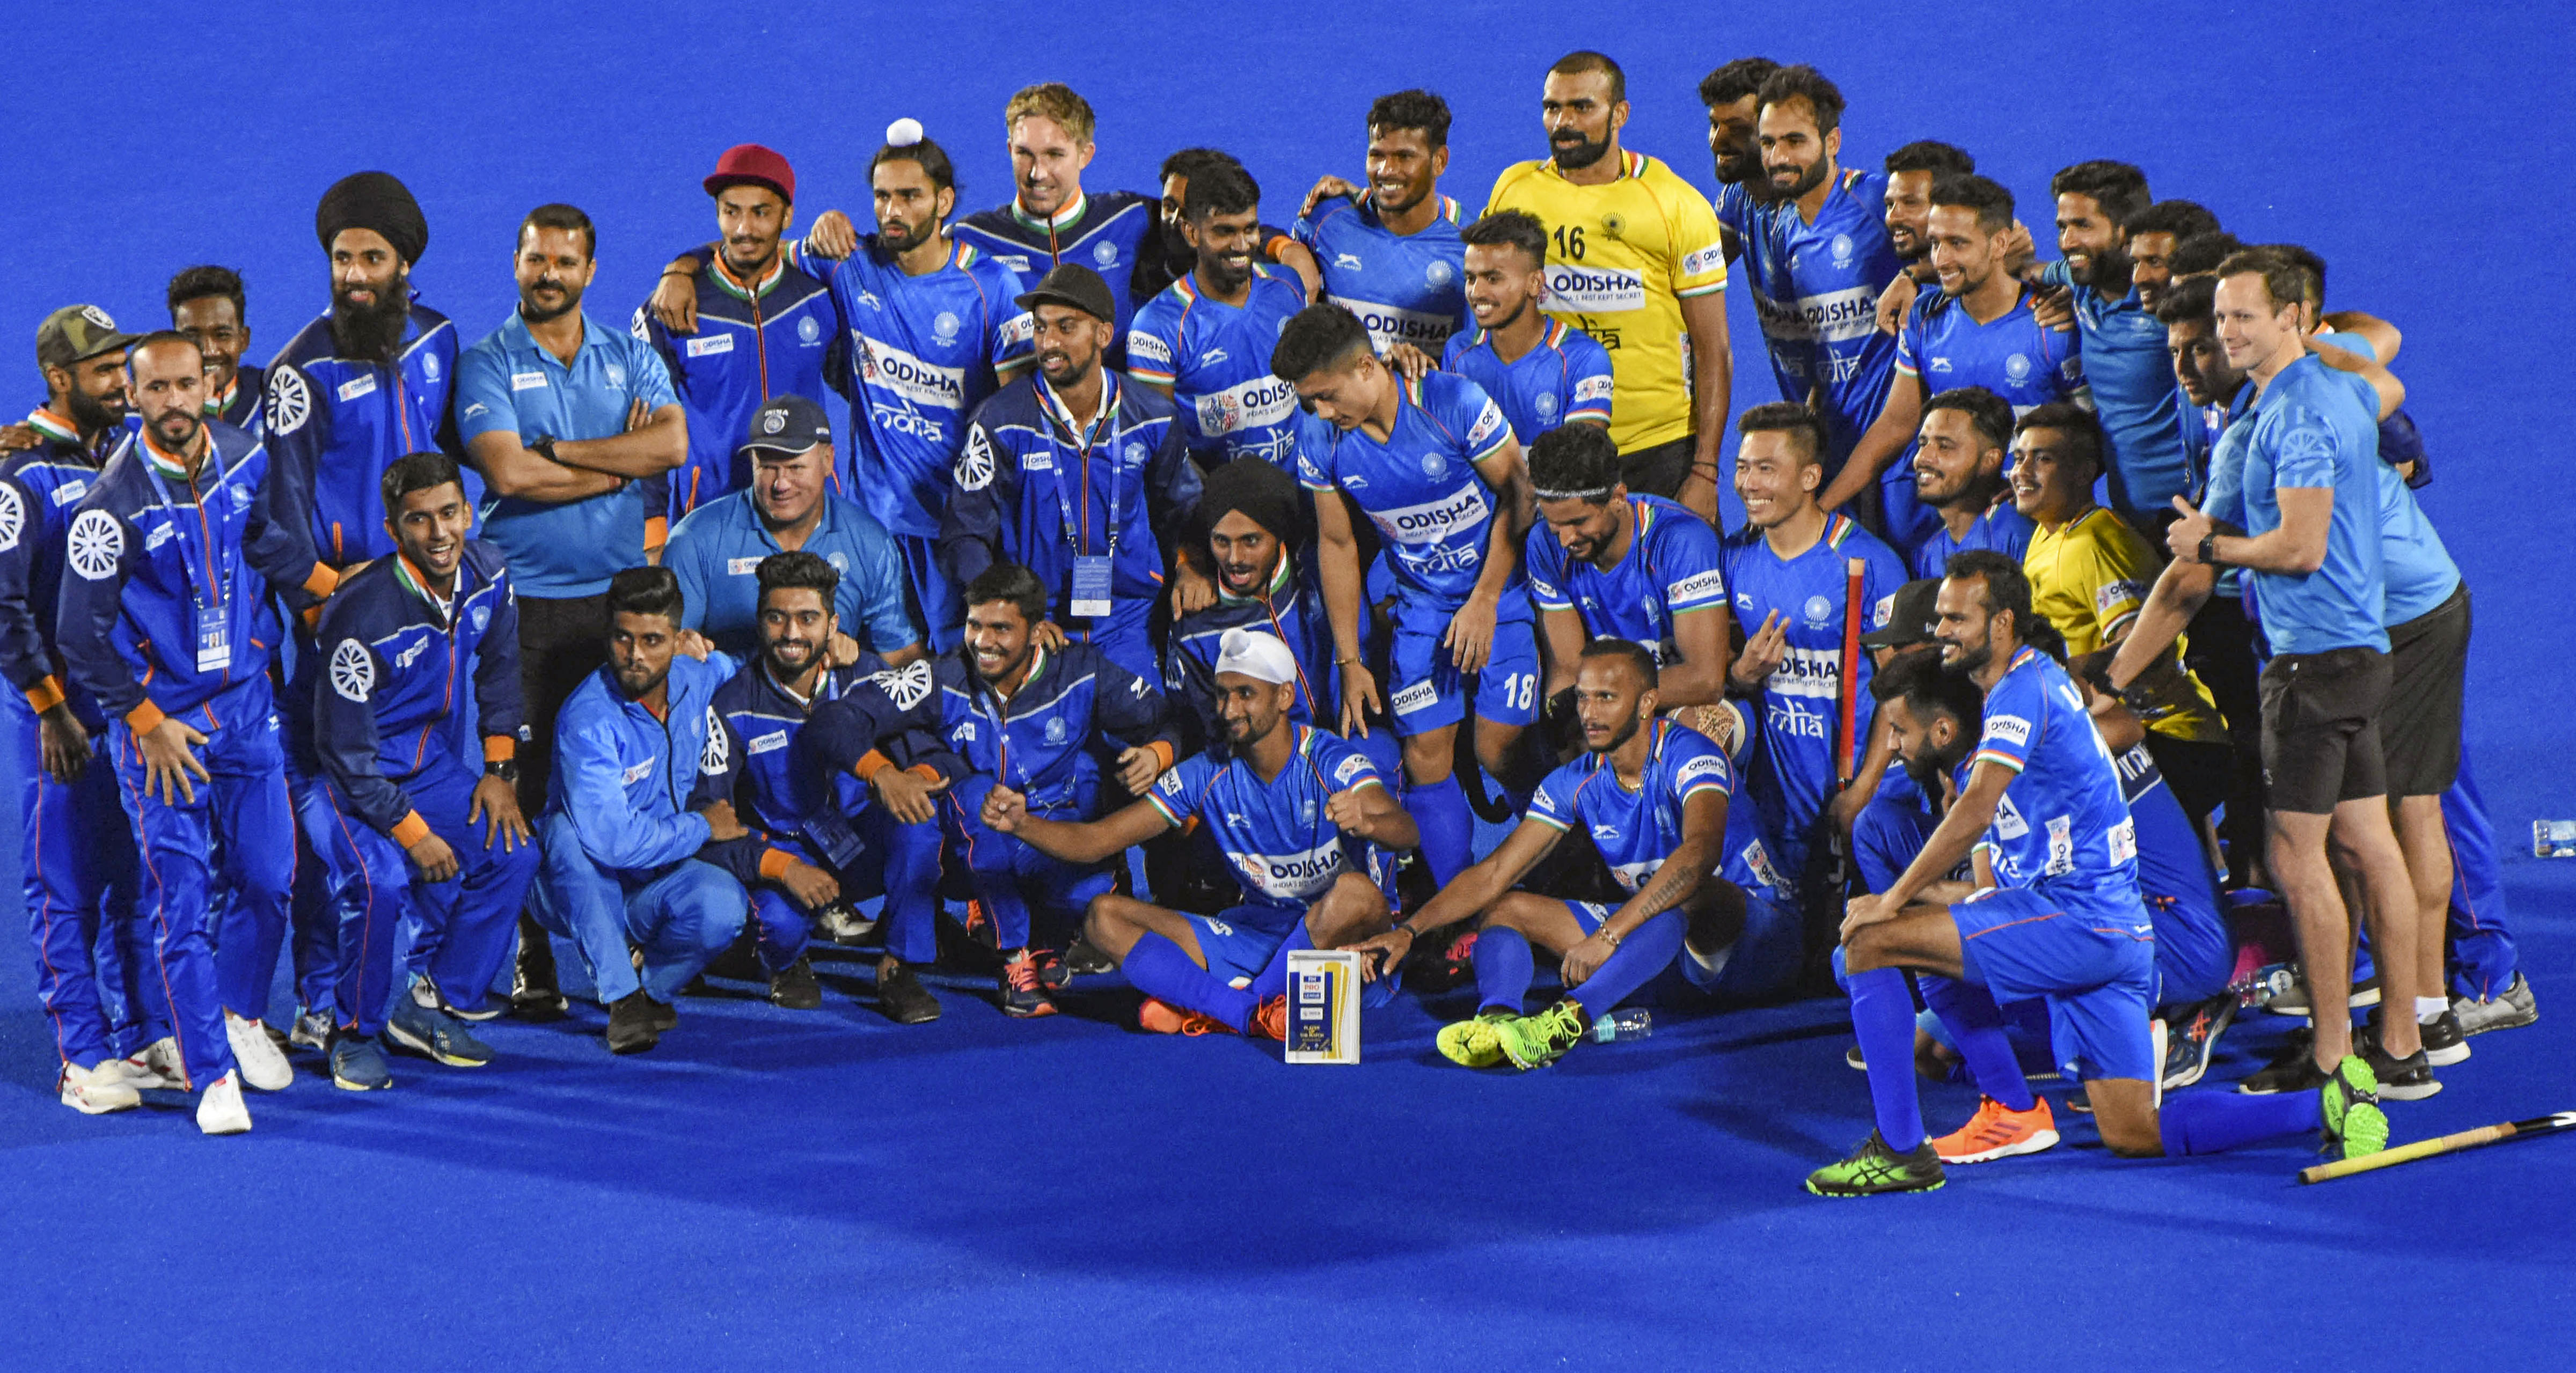 FIH Pro League, India, Netherlands, Hockey, Indian mens hockey team, Indian hockey, Manpreet Singh